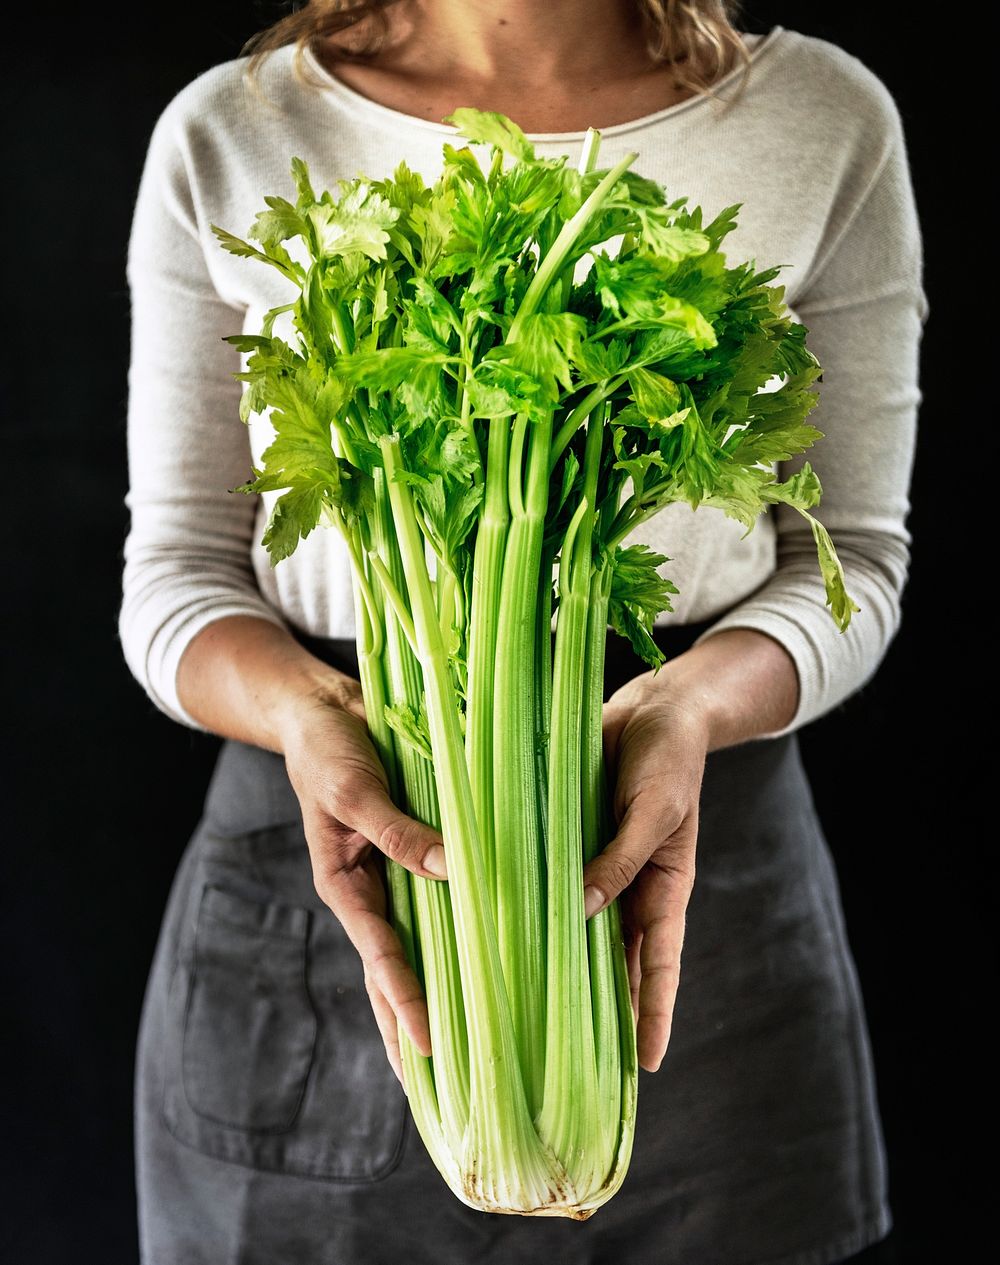 Closeup of hands holding fresh organic celery